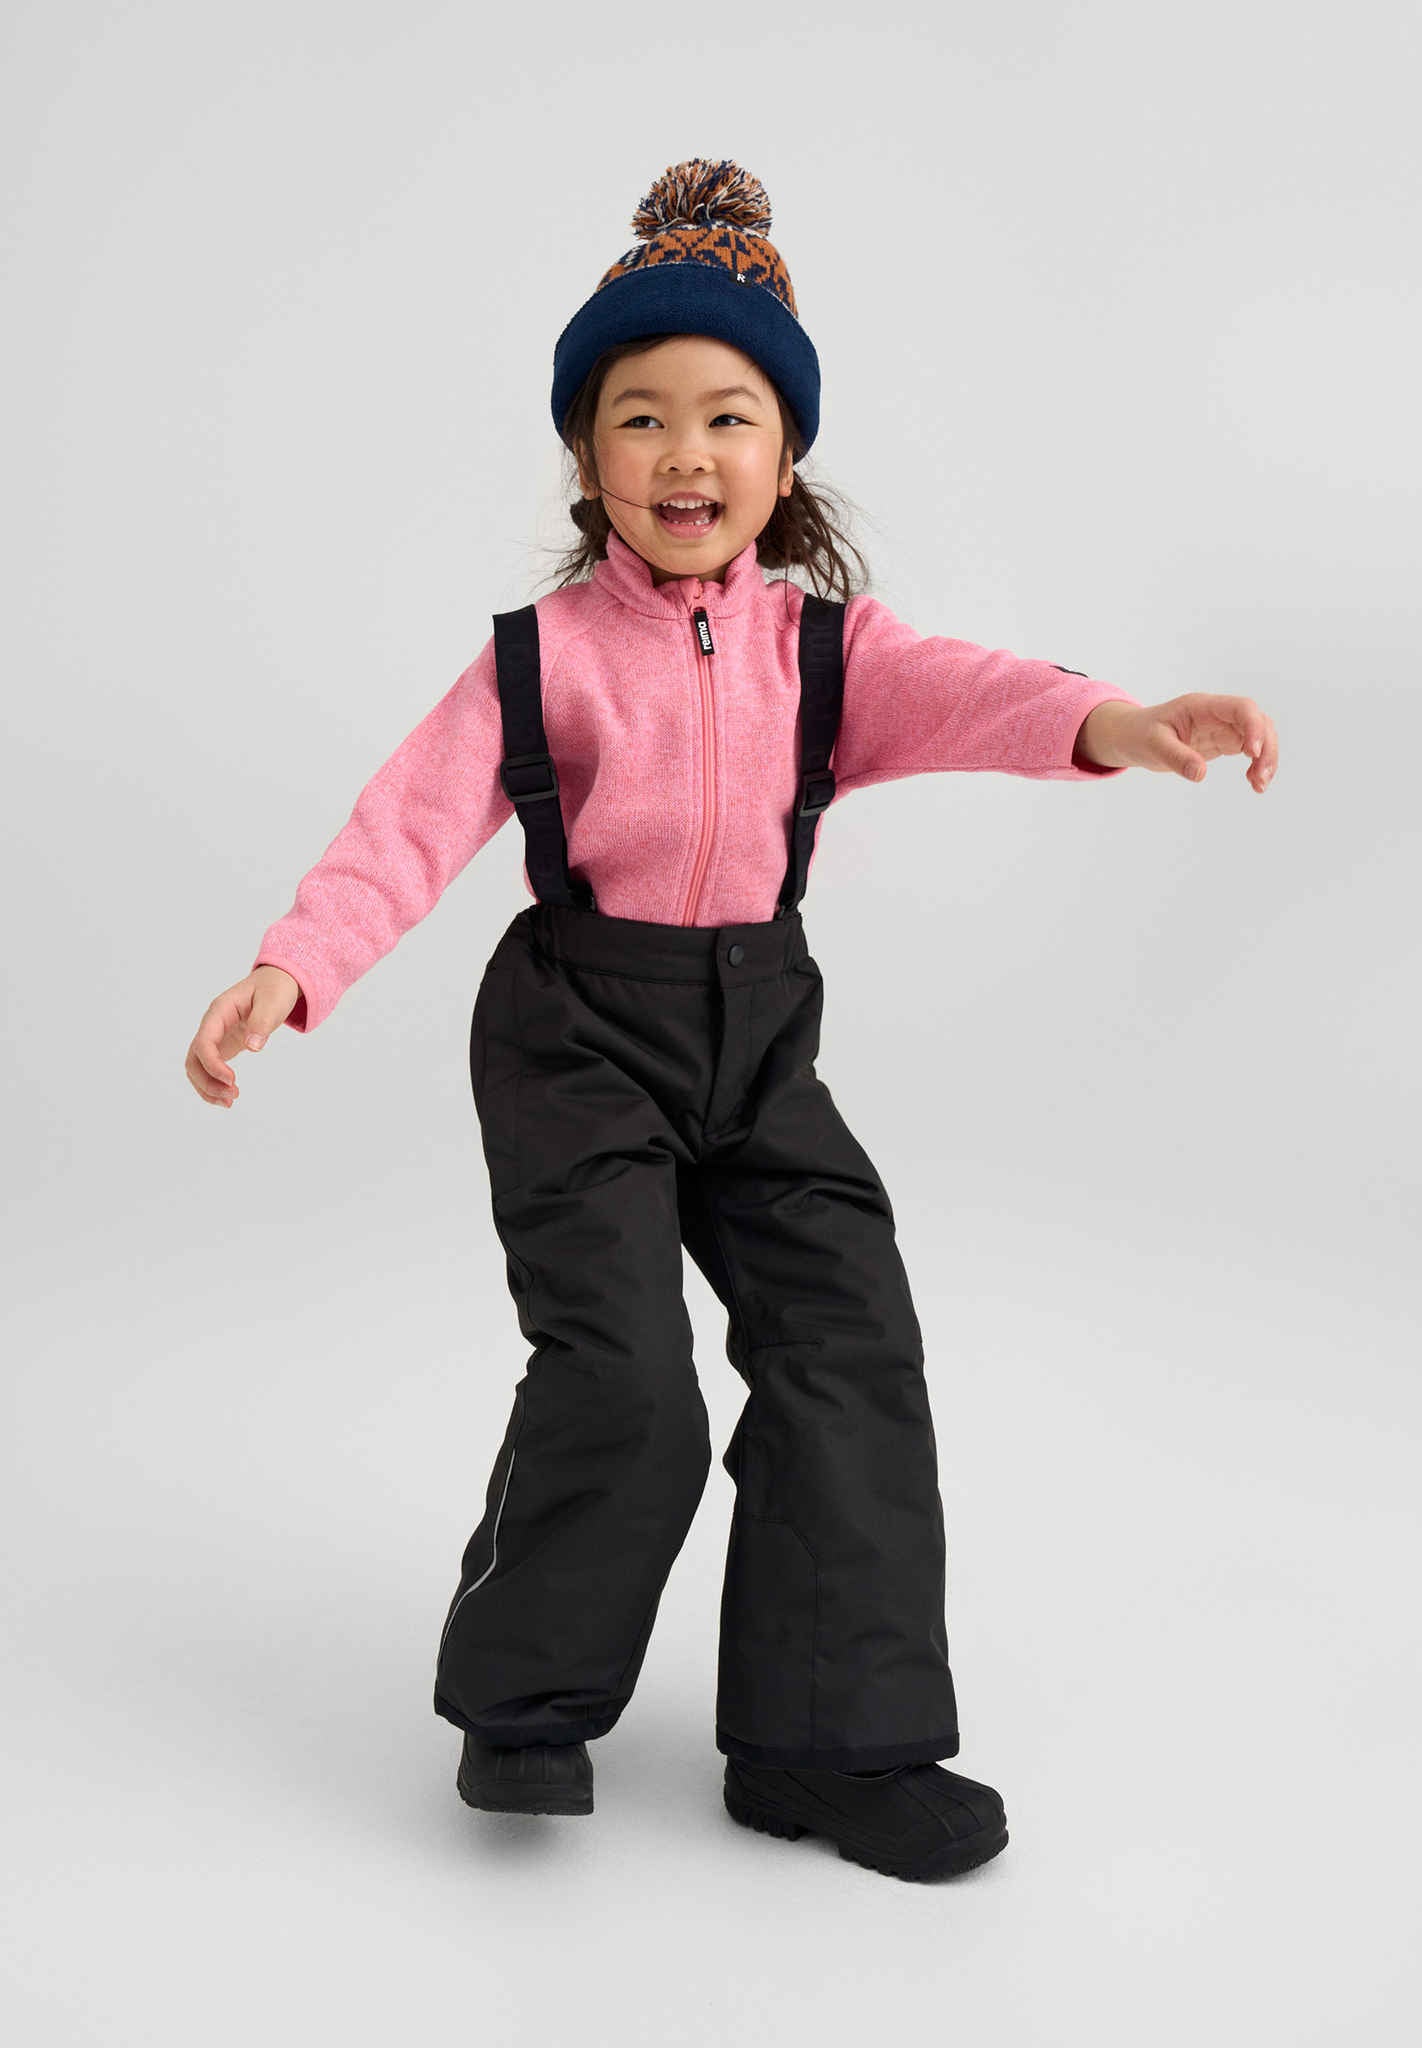 Shop Durable Kids Outerwear from Reima US | Parkas